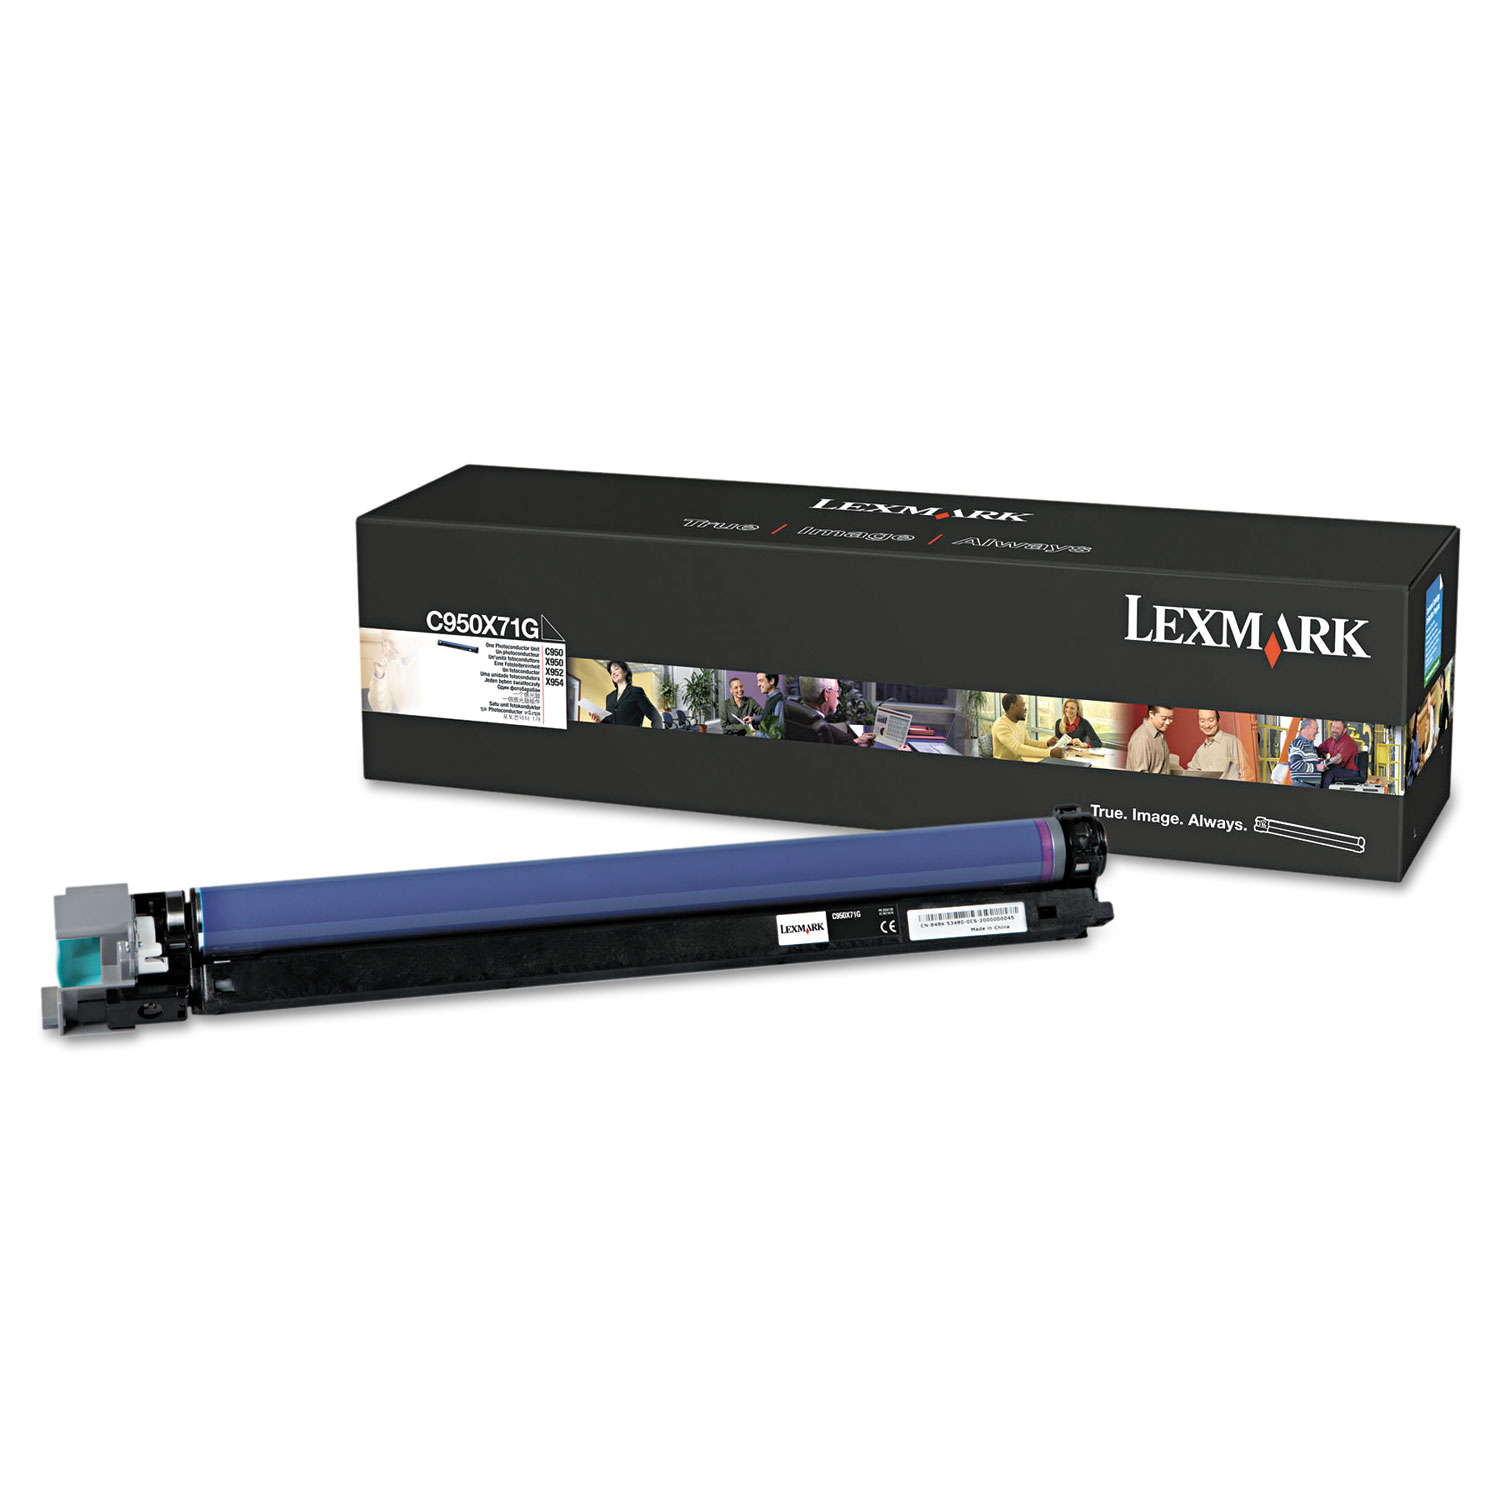  Lexmark C950X71G C950X71G Photoconductor Kit, 115000 Page-Yield, Black (LEXC950X71G) 